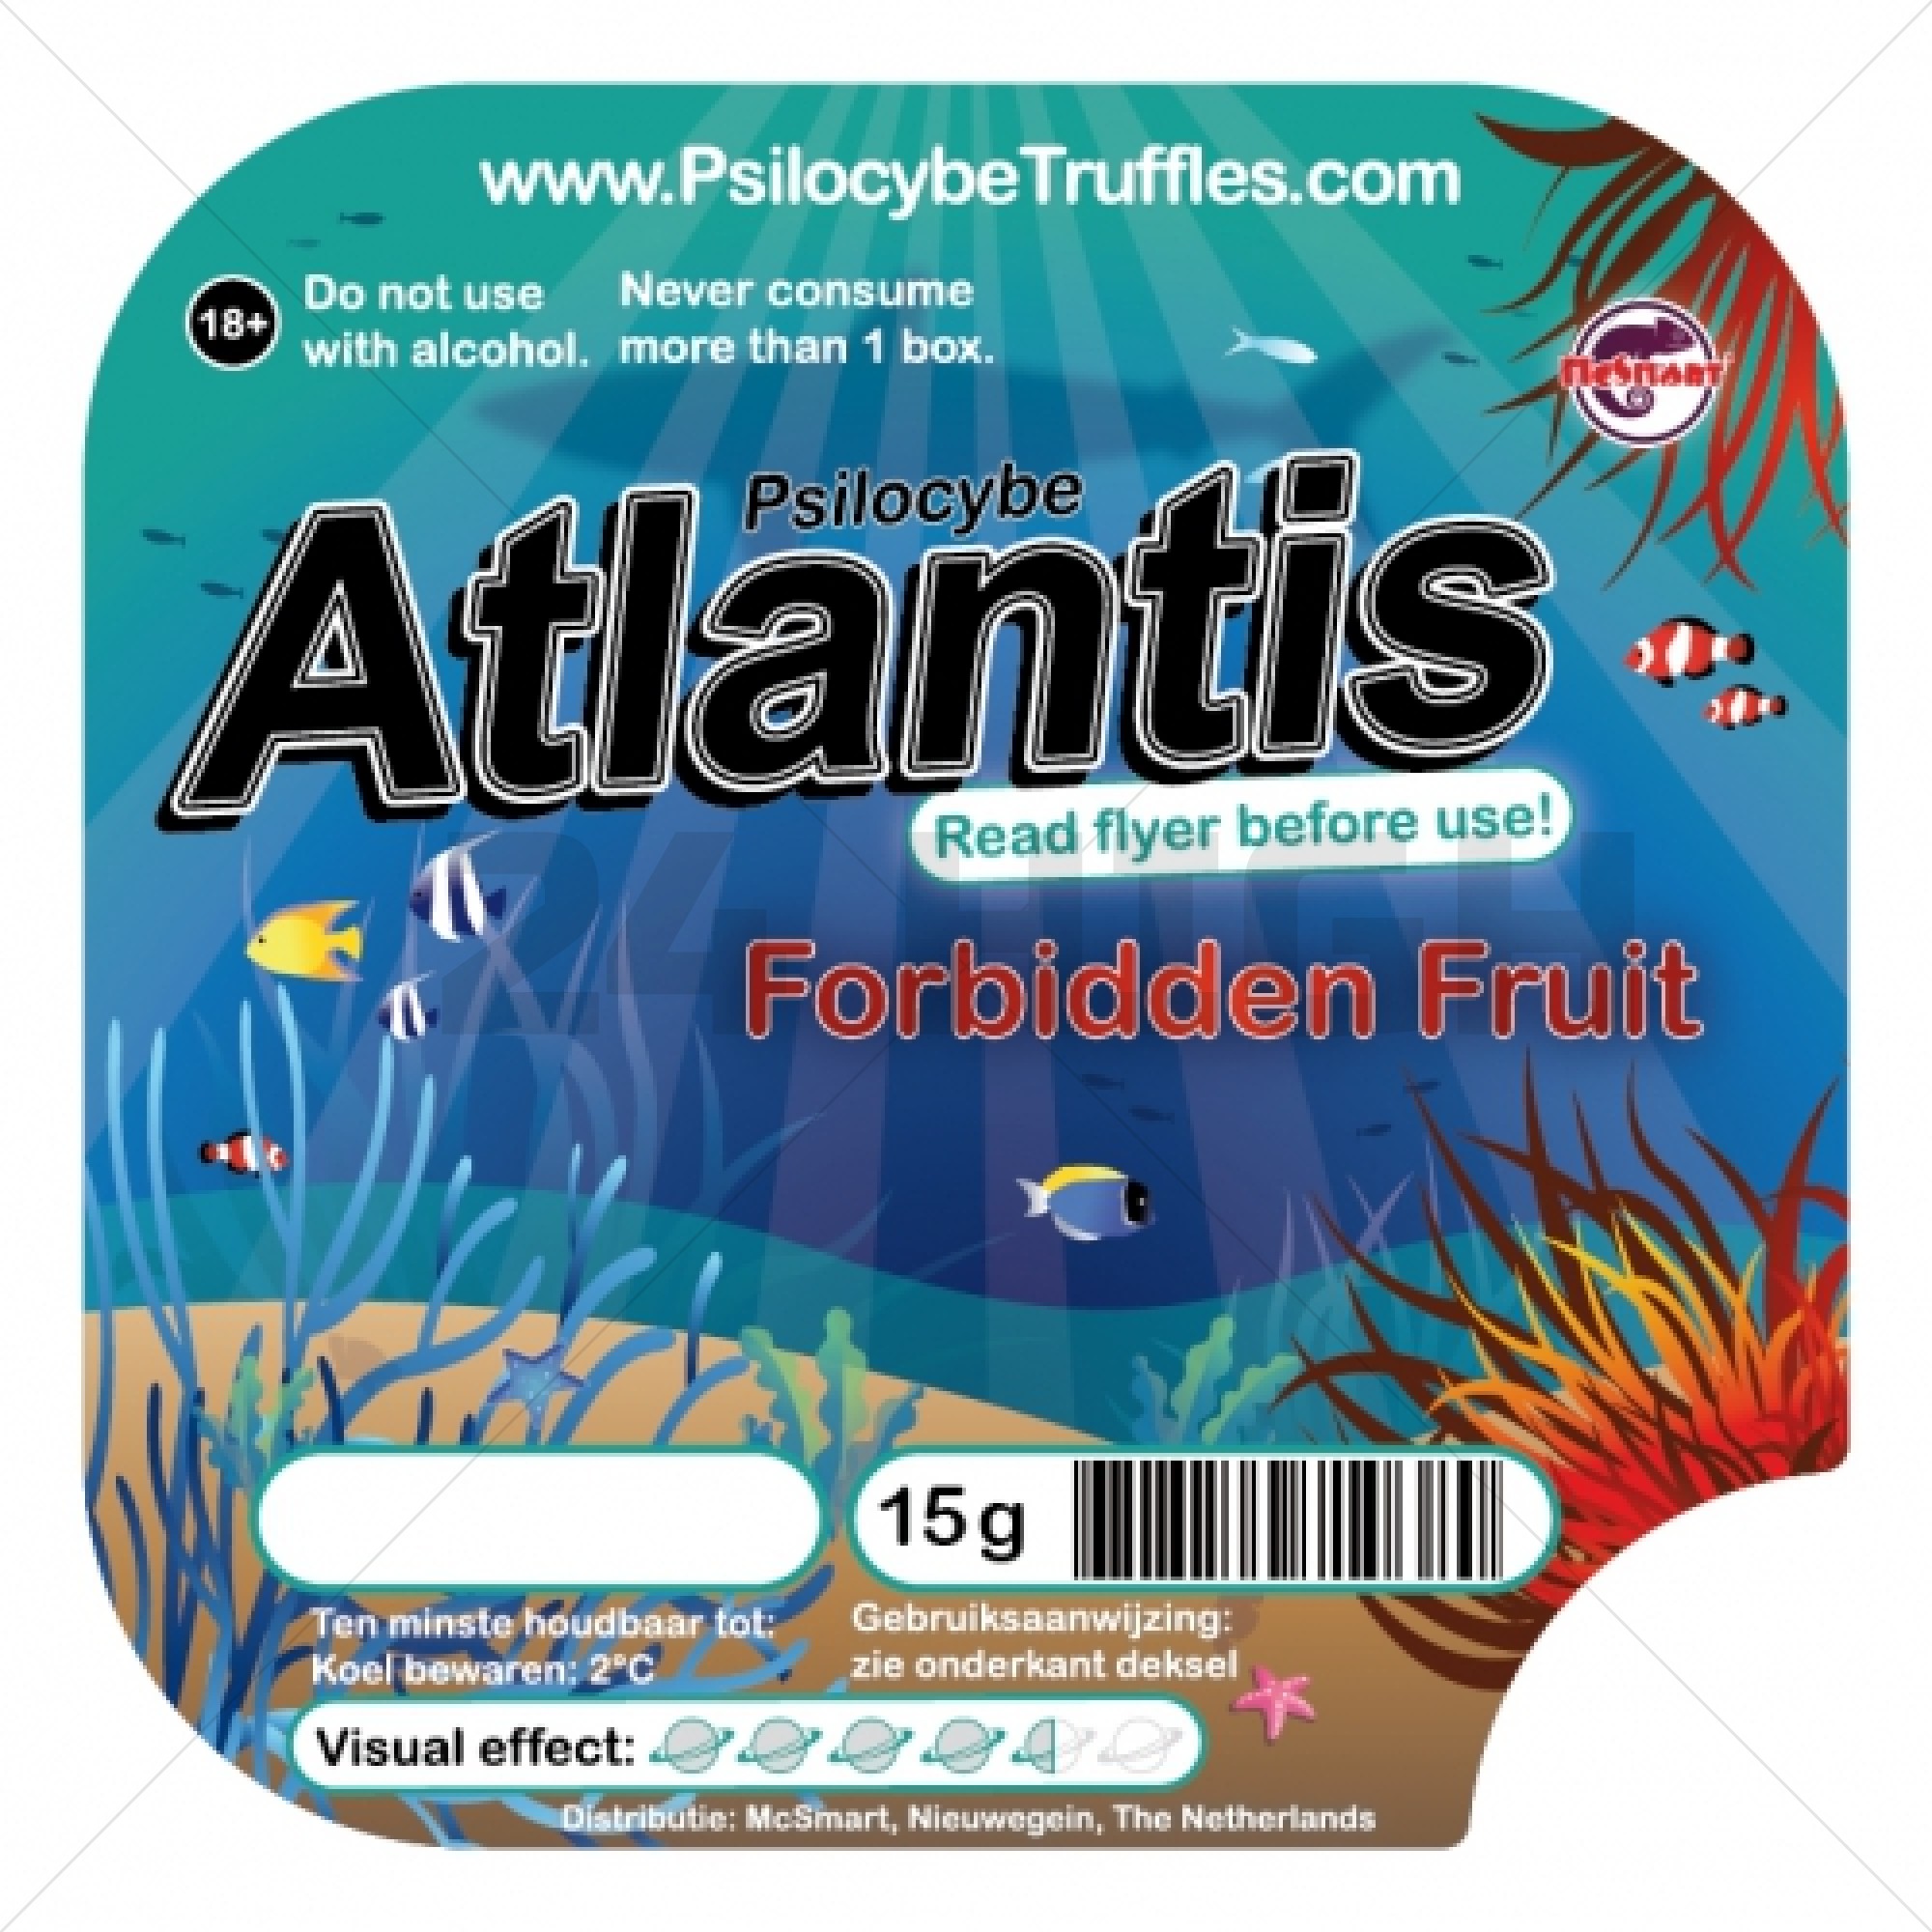 Truffes Atlantis